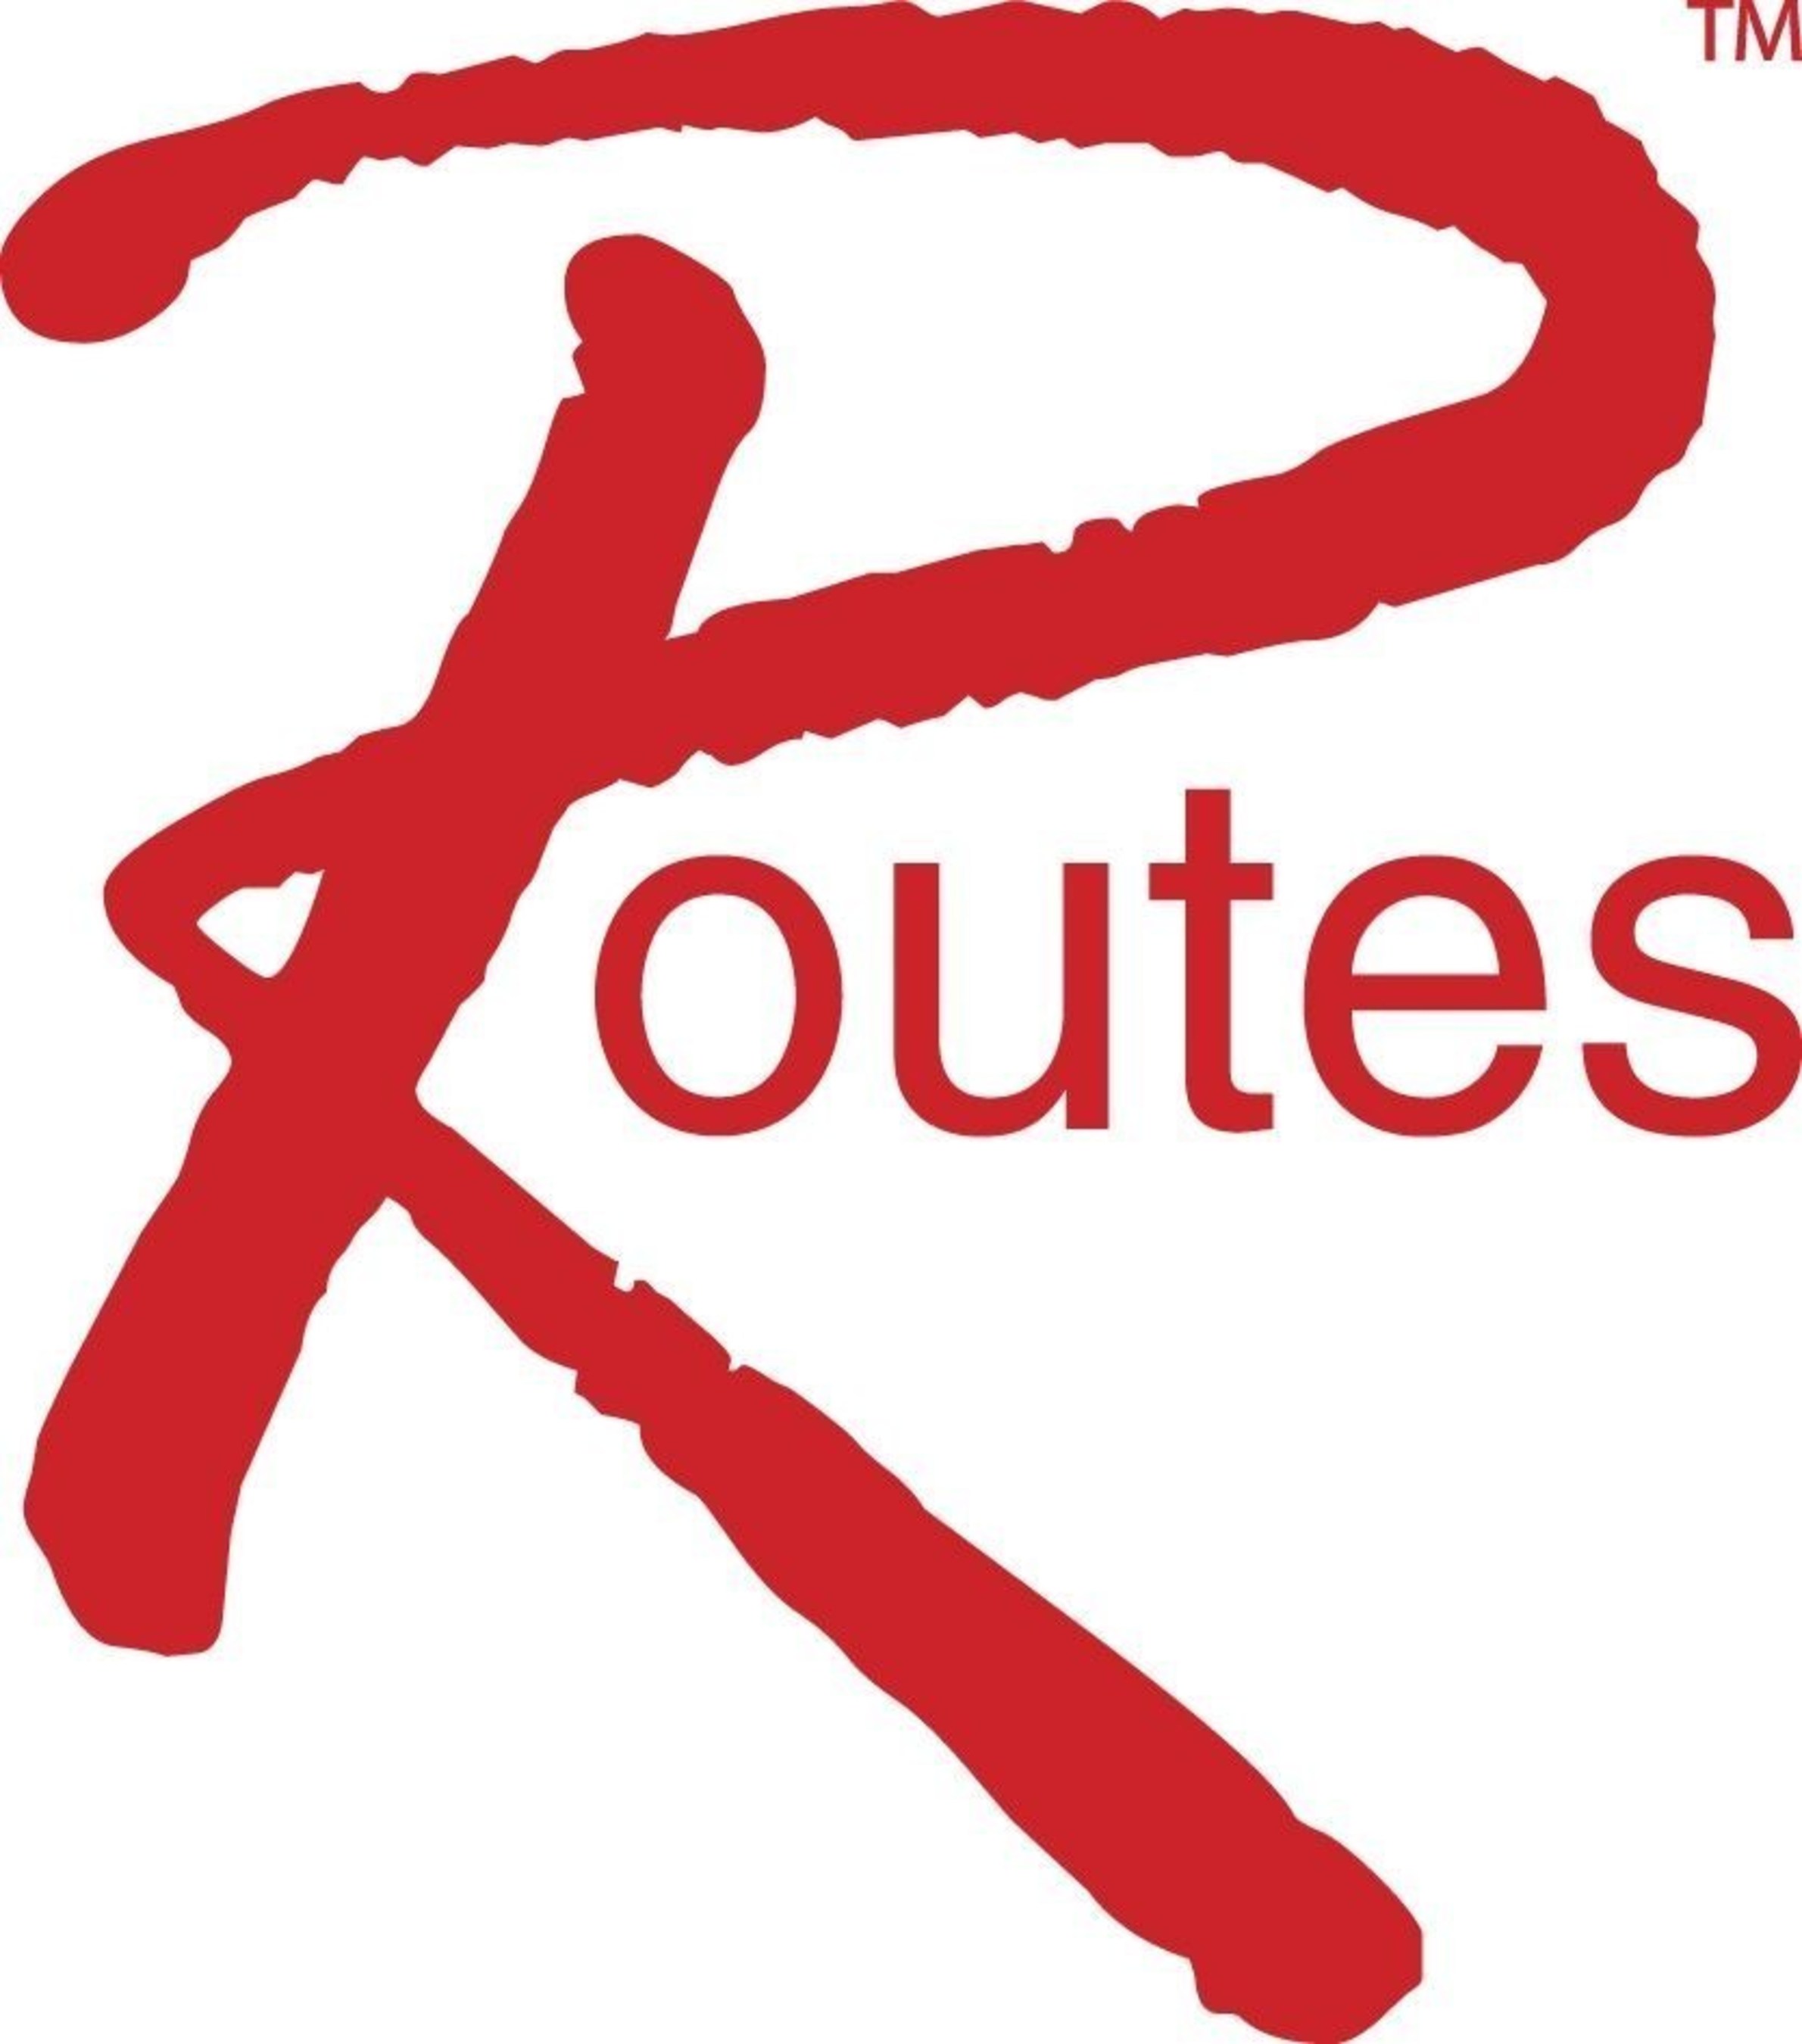 Routes logo (PRNewsFoto/UBM EMEA Routes Ltd) (PRNewsFoto/UBM EMEA Routes Ltd)